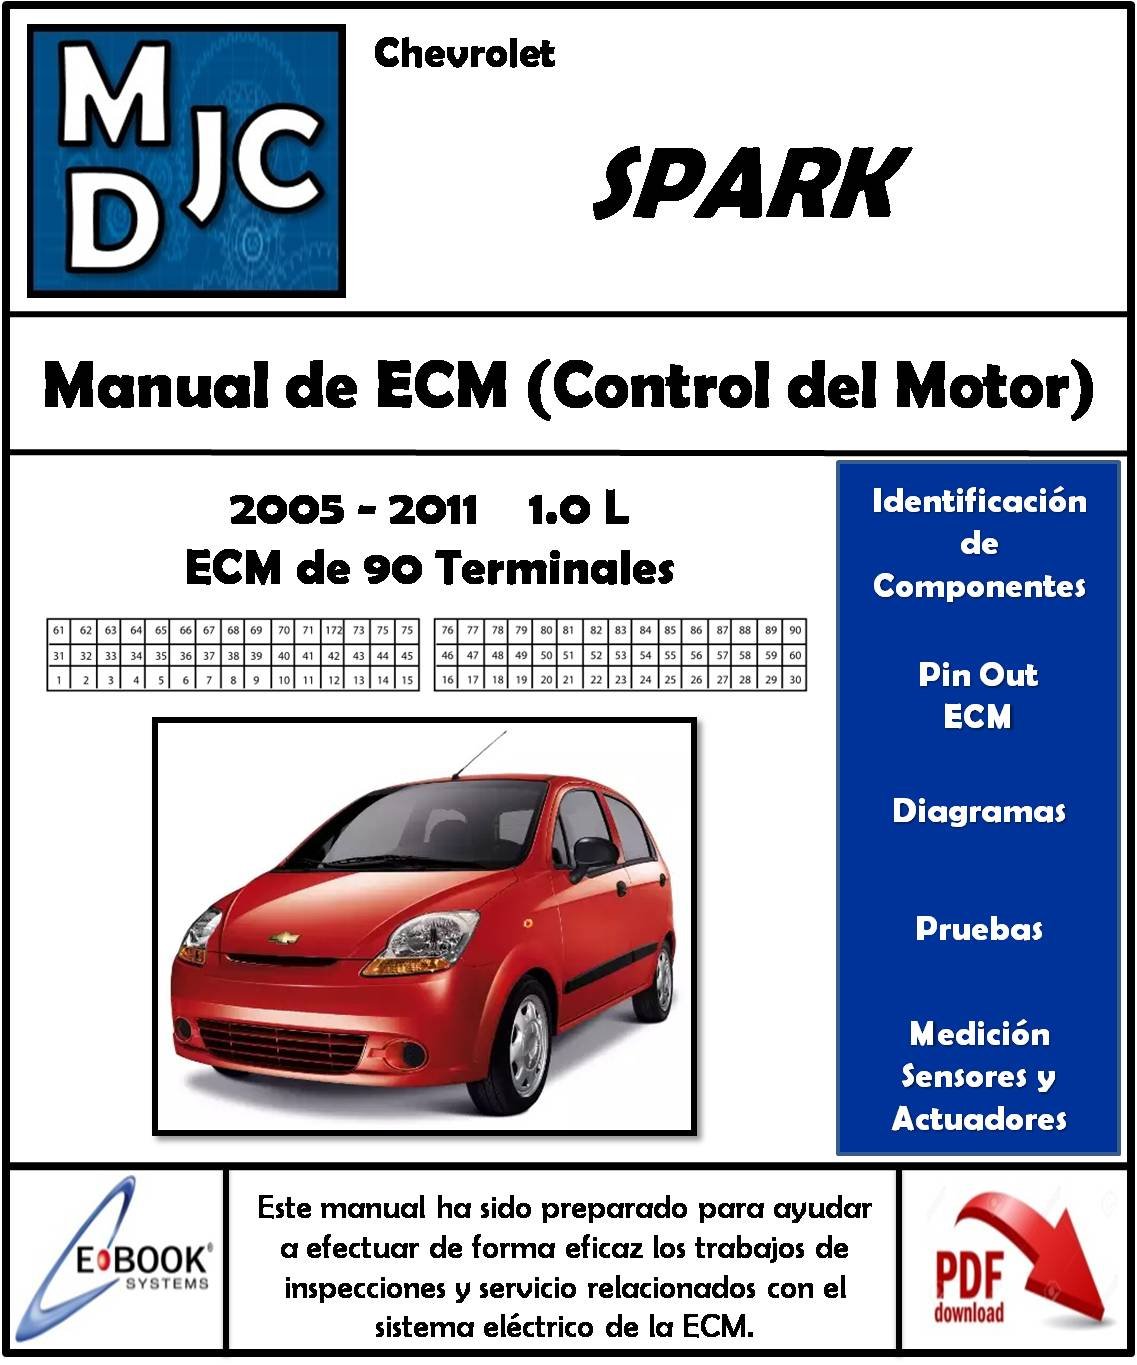 Manual de ECM y Control de Motor Chevrolet Spark 1.0 L 2005-2011